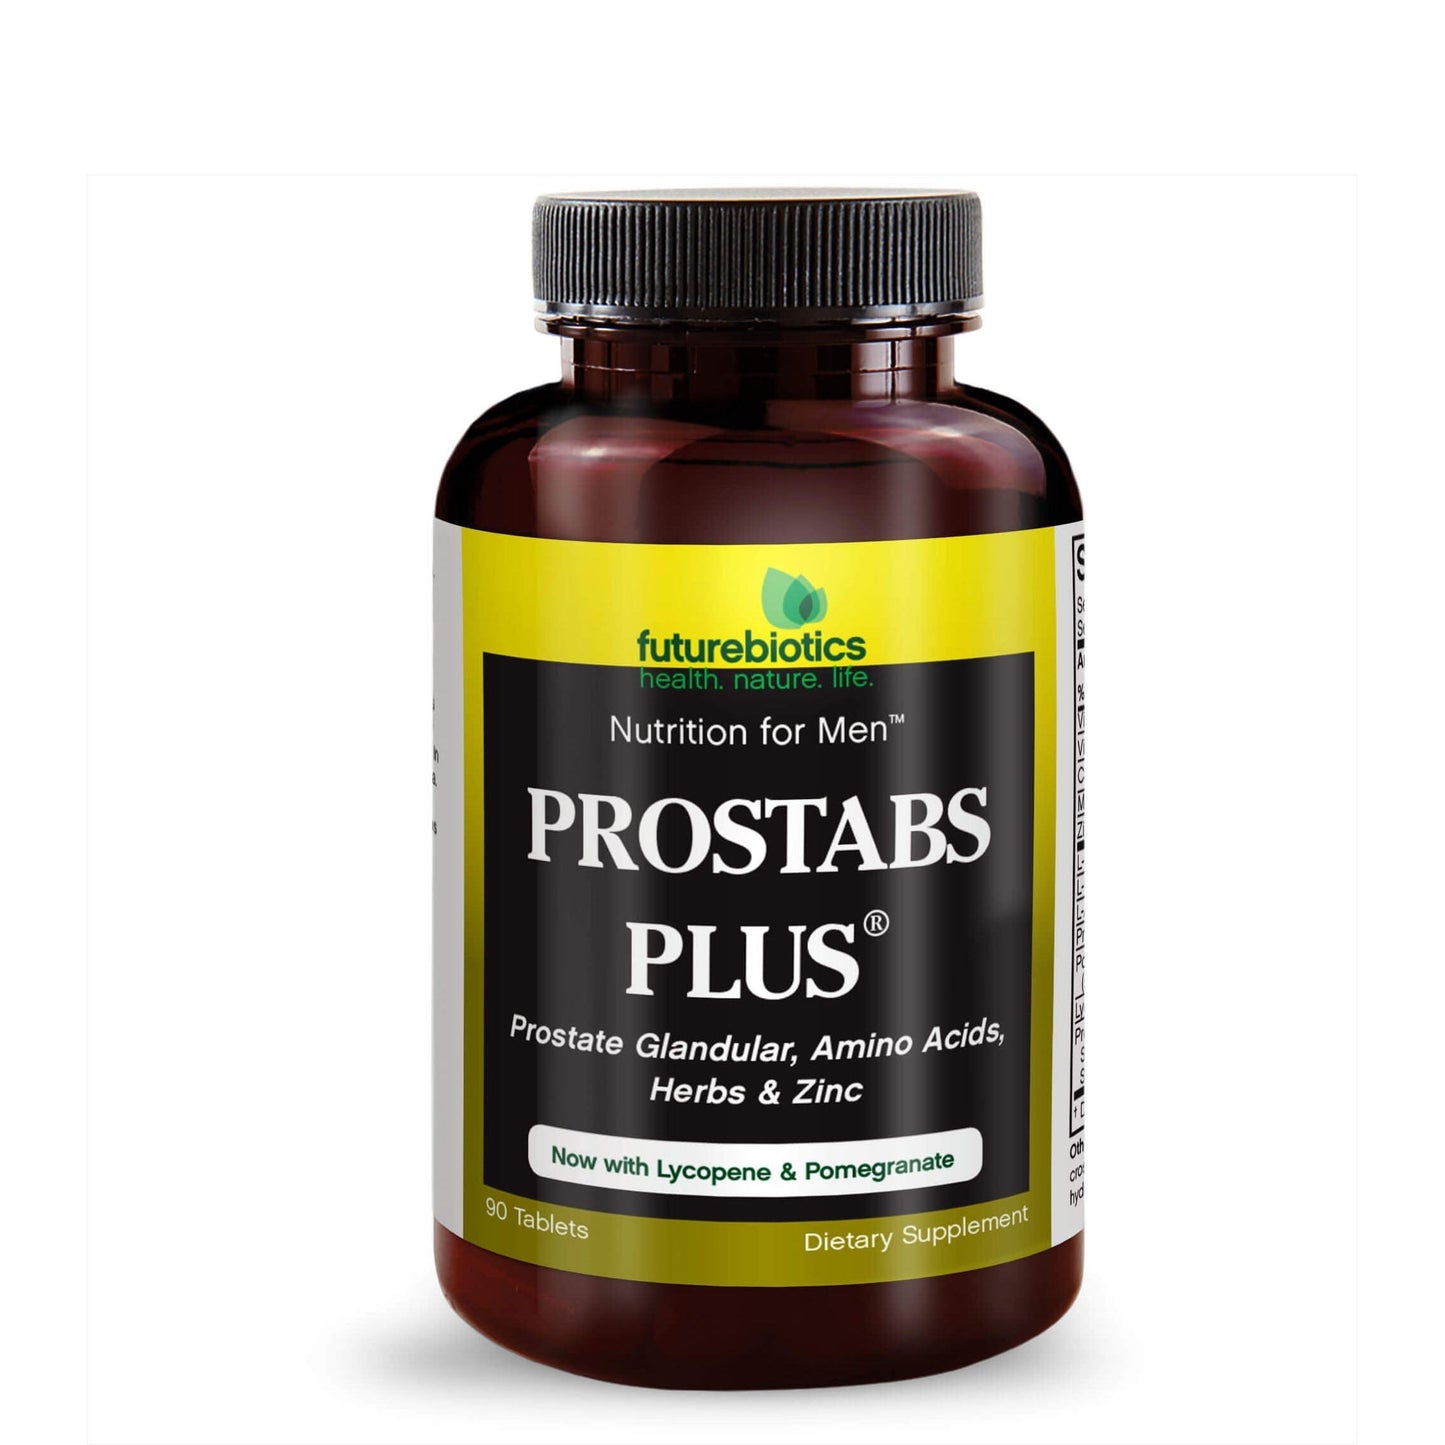 Futurebiotics Prostabs Plus Prostate Health Tablets, 90 Tablets